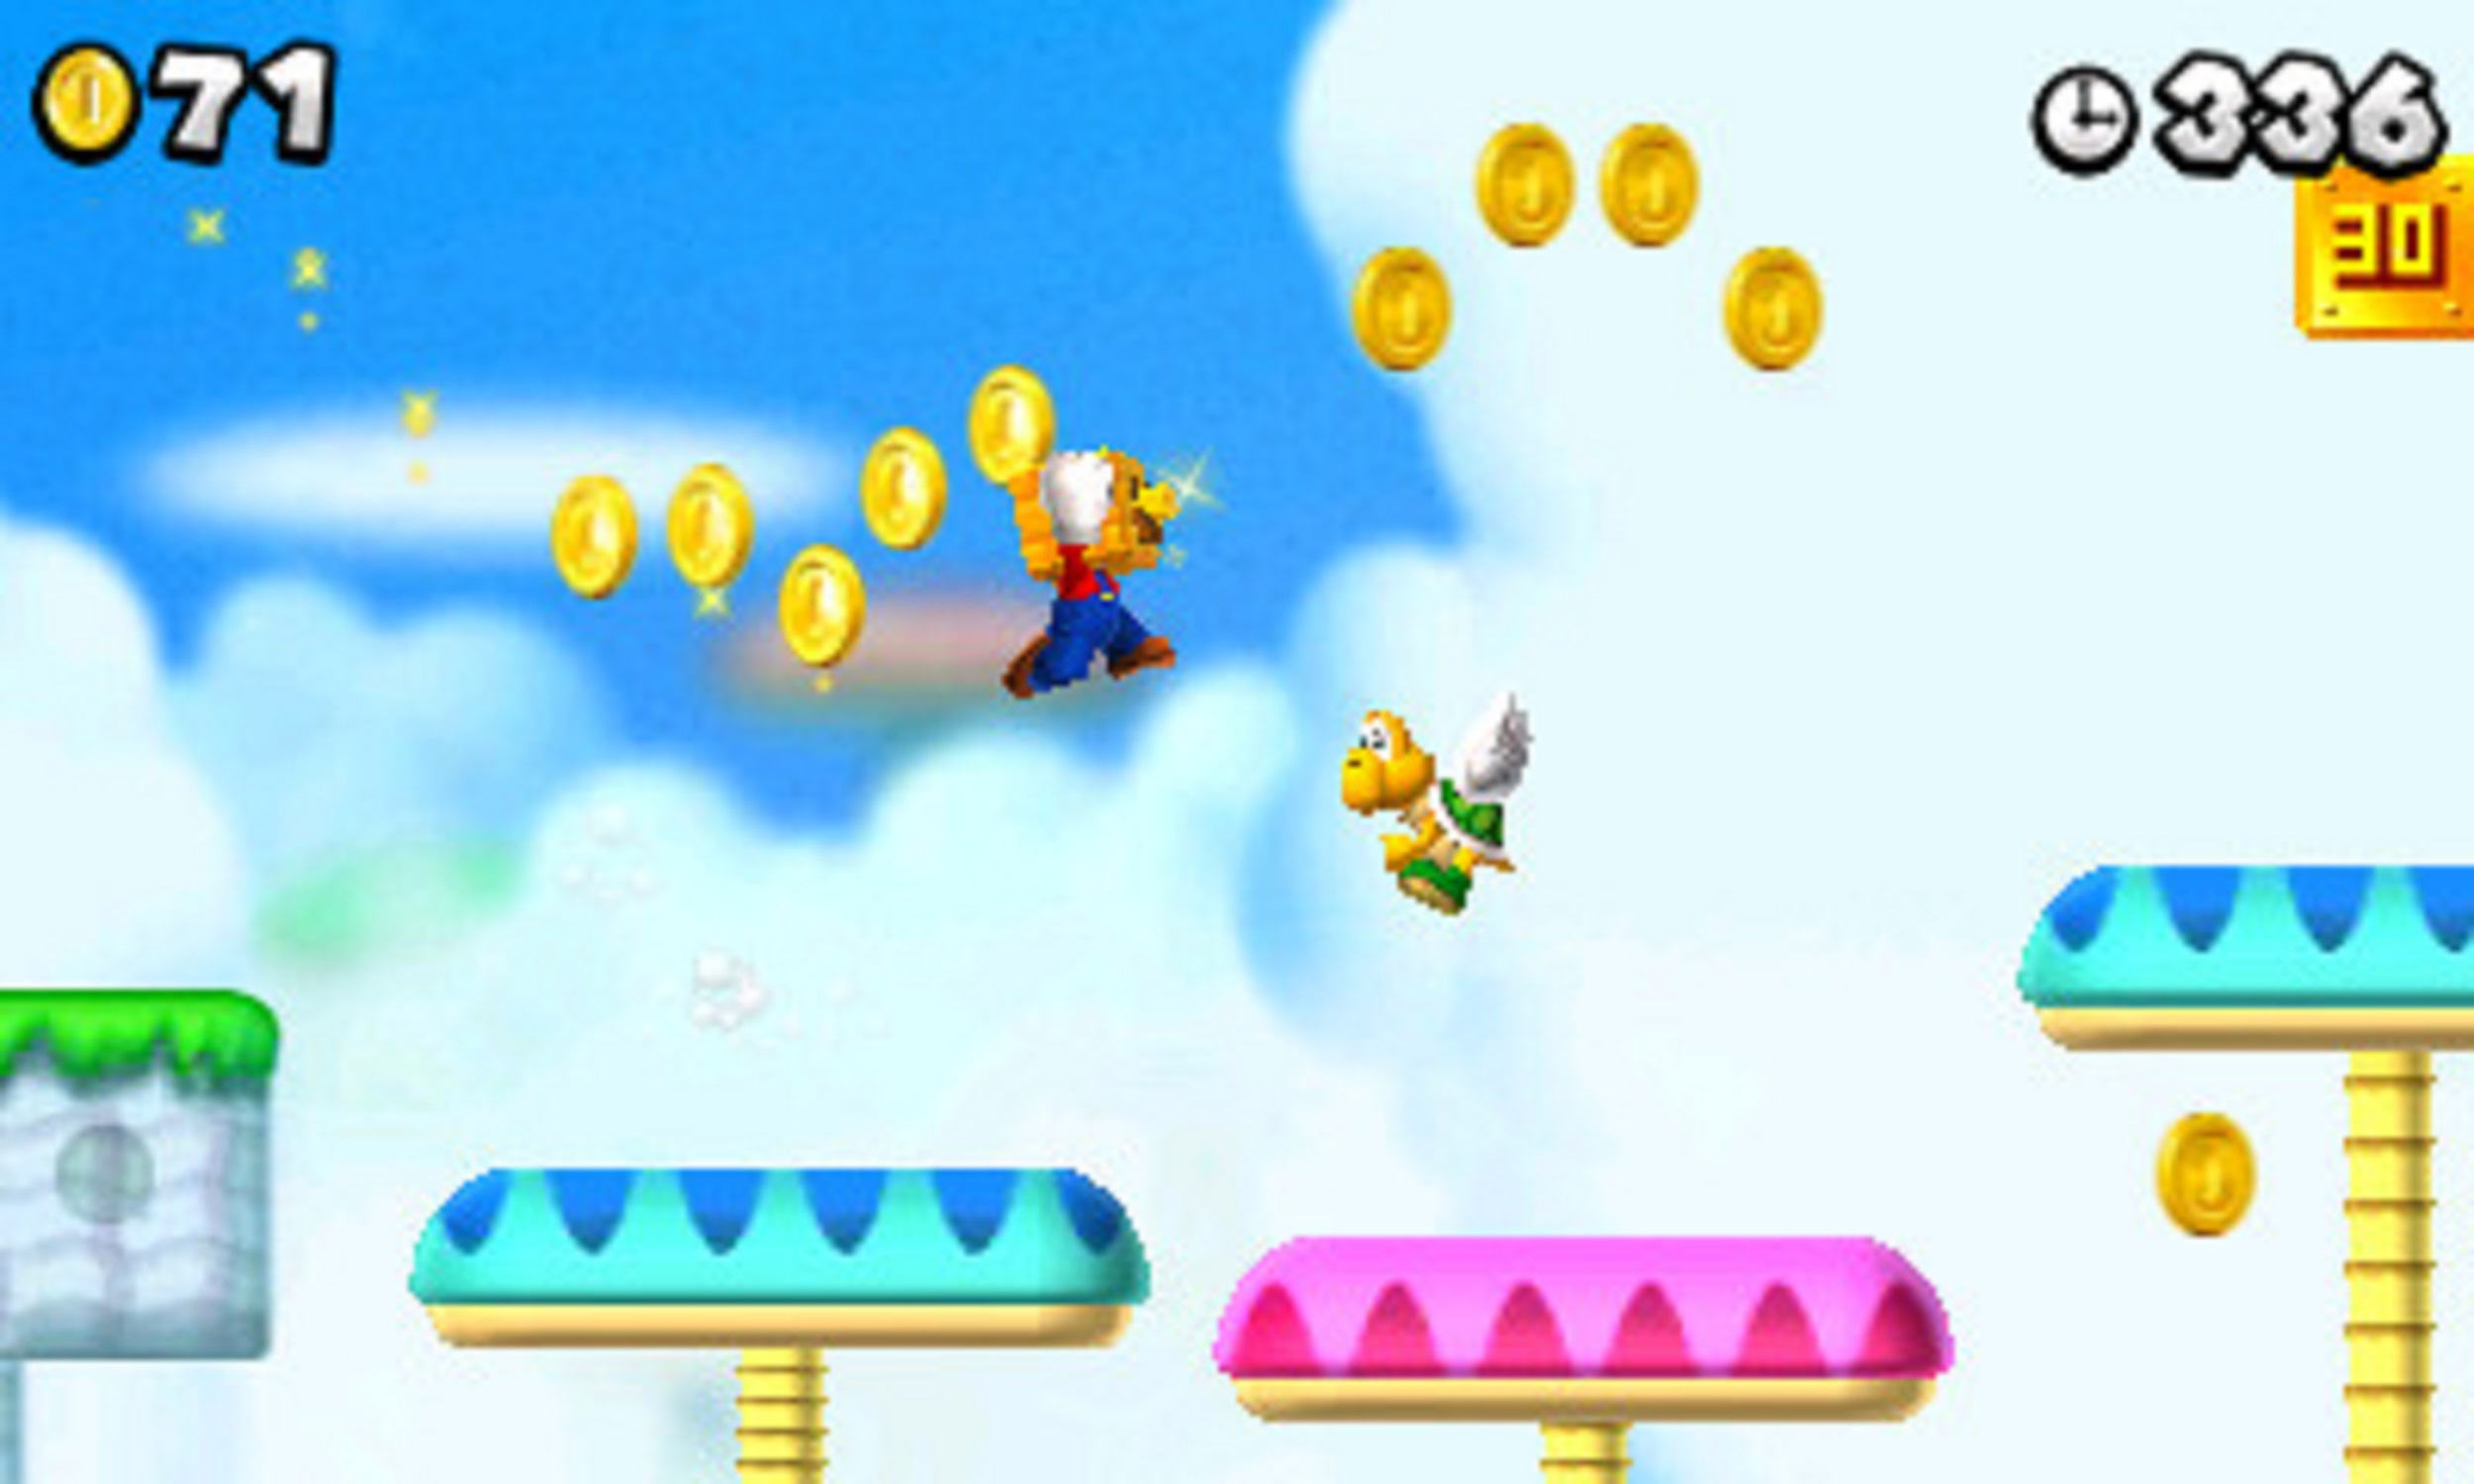 Super New [Nintendo 3DS] Mario - Bros. 2